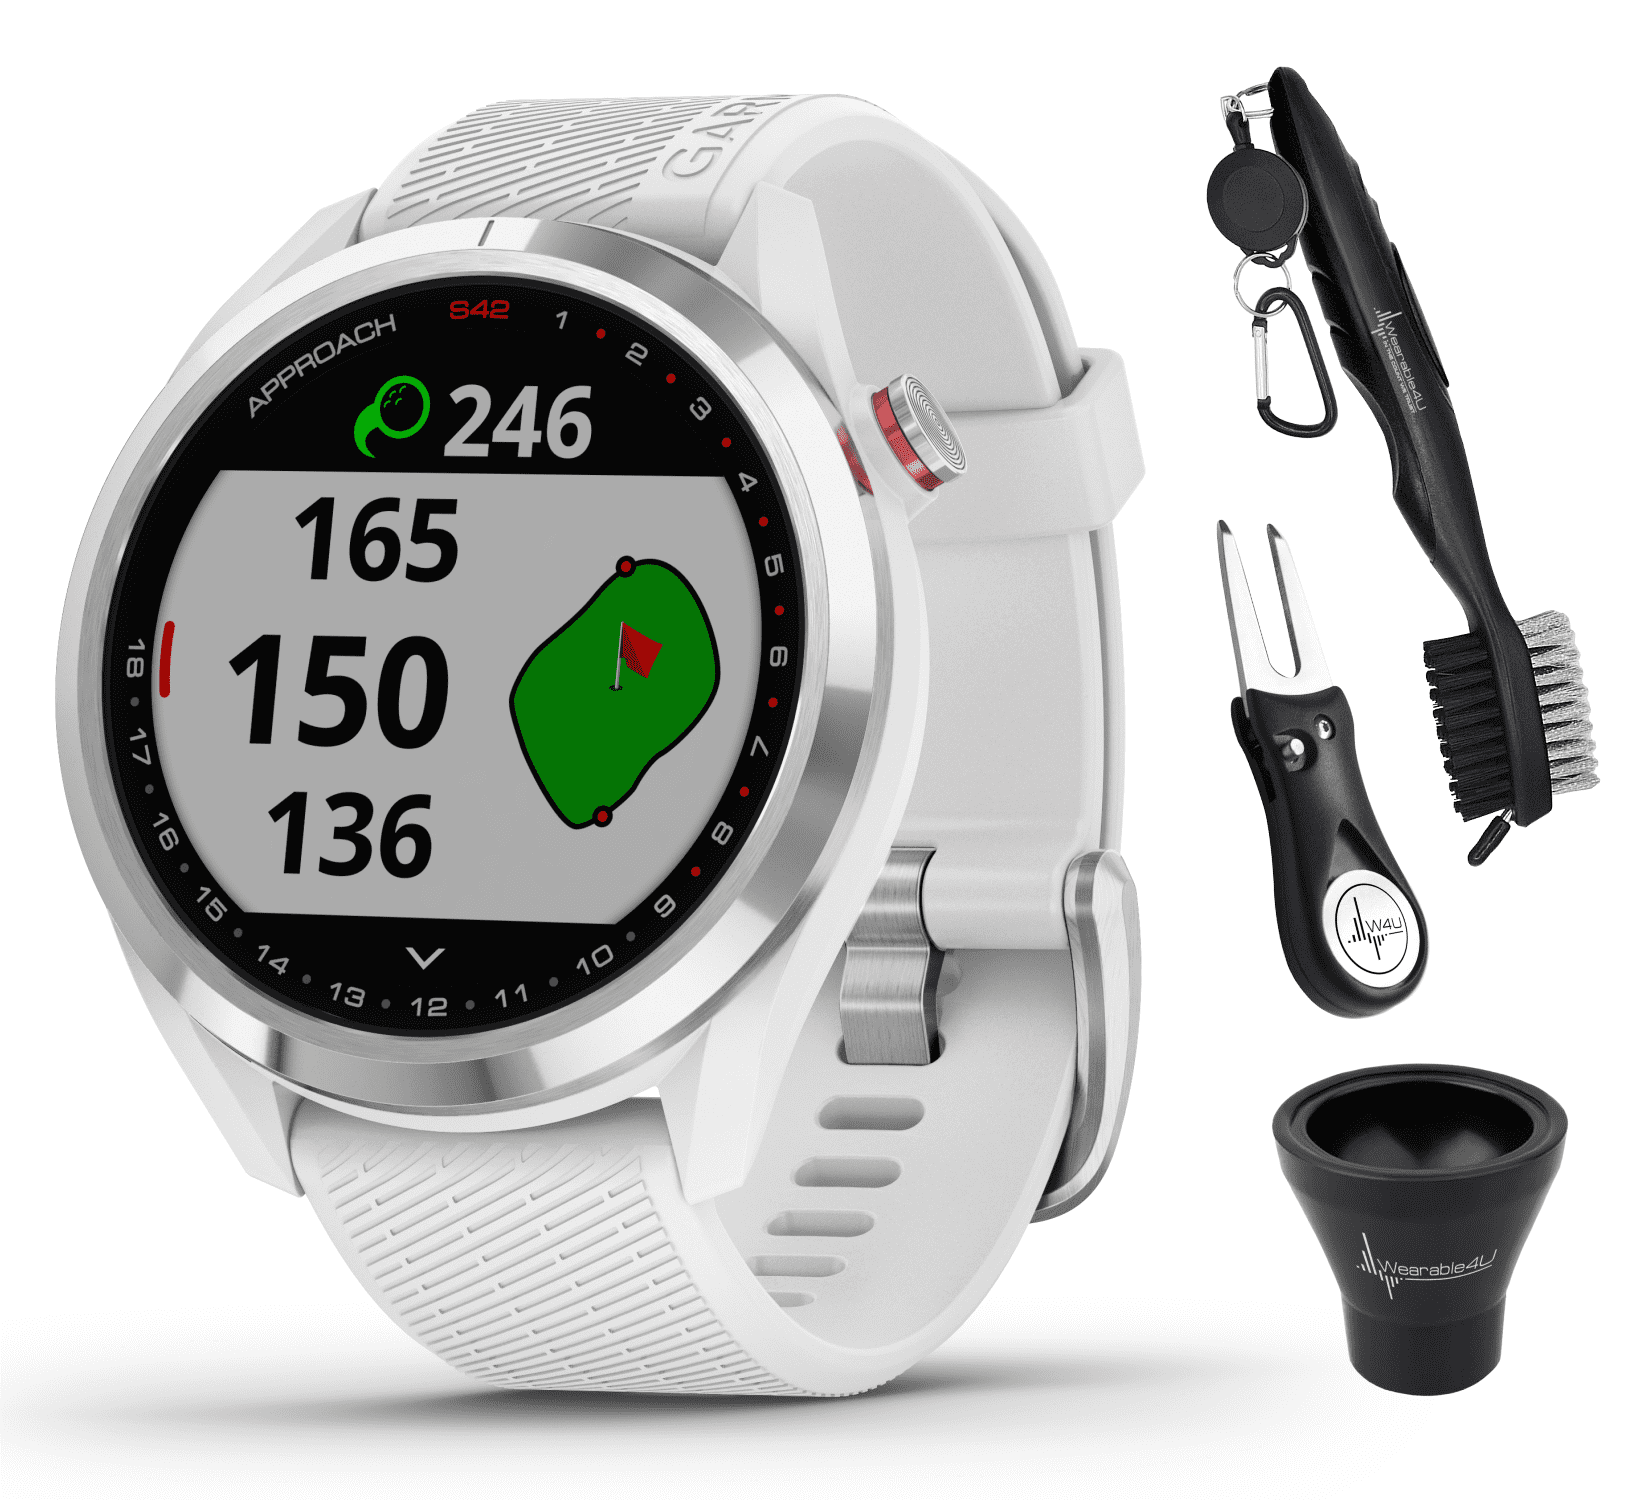 Garmin Approach S42 Premium GPS Golf Watch, Polished Silver